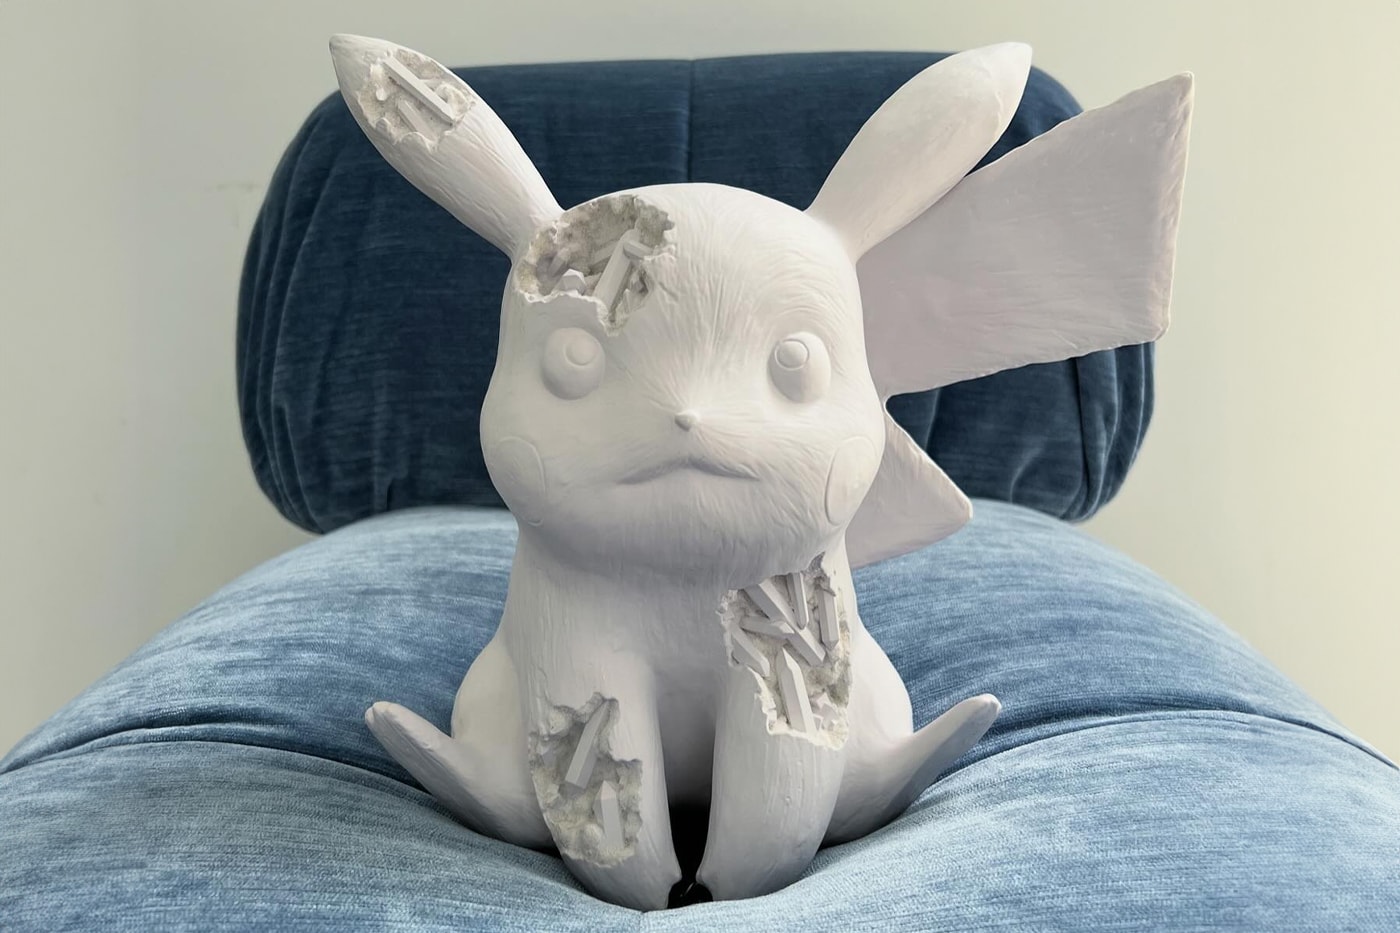 Daniel Arsham Announces Final 'Pokémon' Release crystalized seated pikachu edition sculpture eroded art 